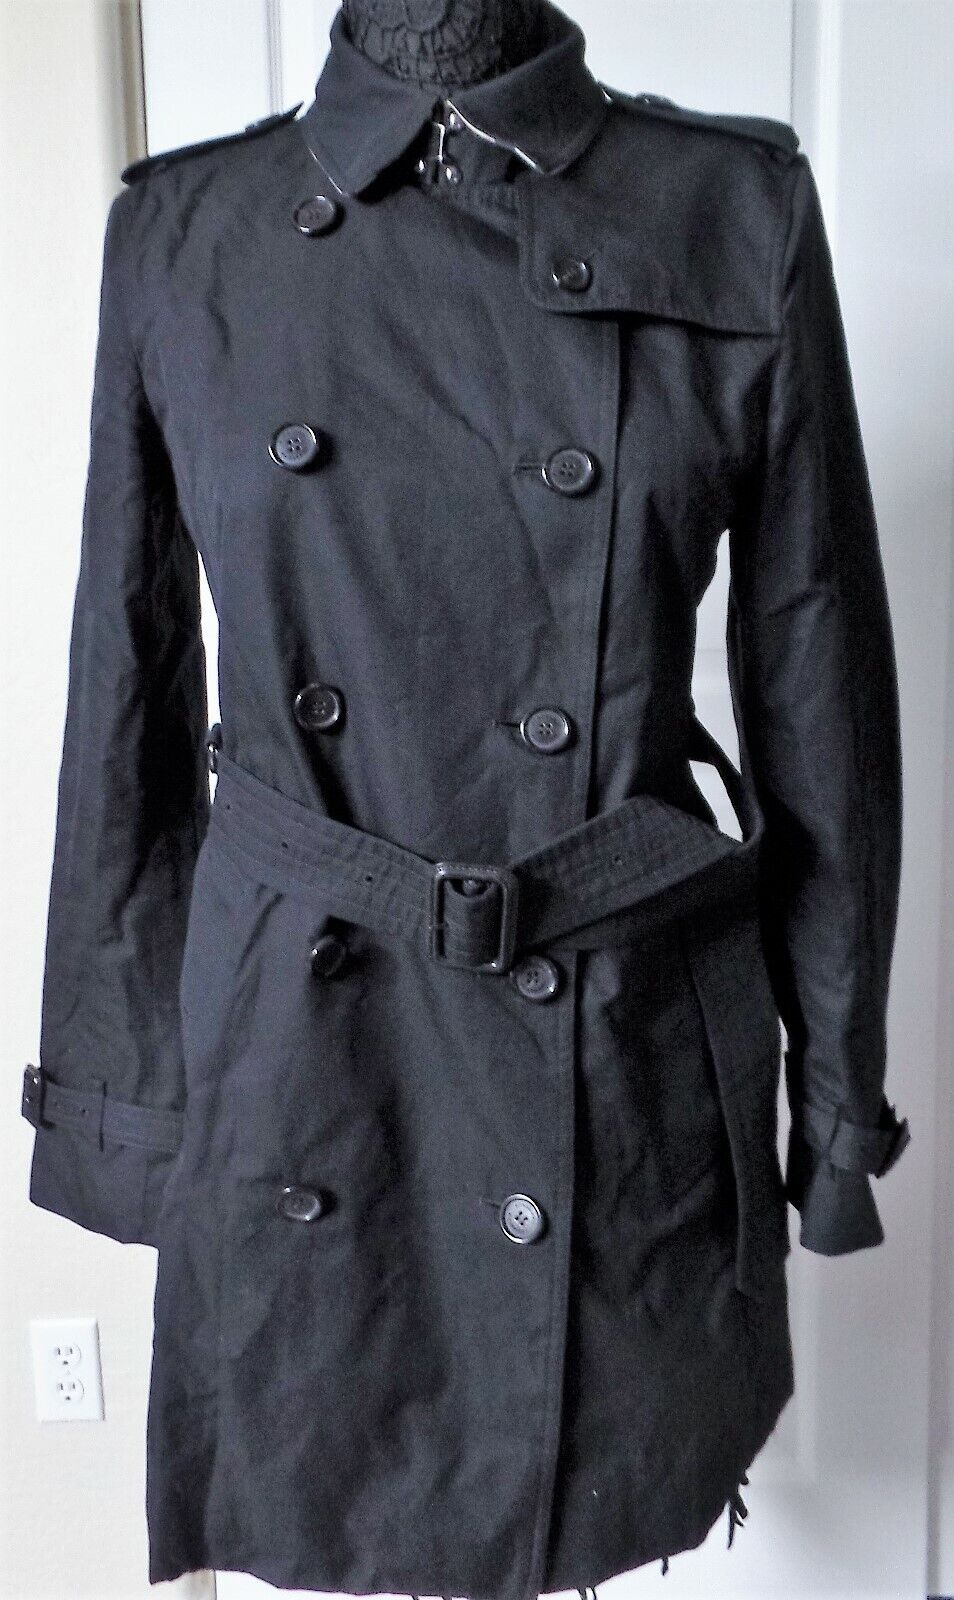 jogger Afhængig Ideel Burberry Kensington Mid Trench Coat - Size 8 - $1790 | eBay